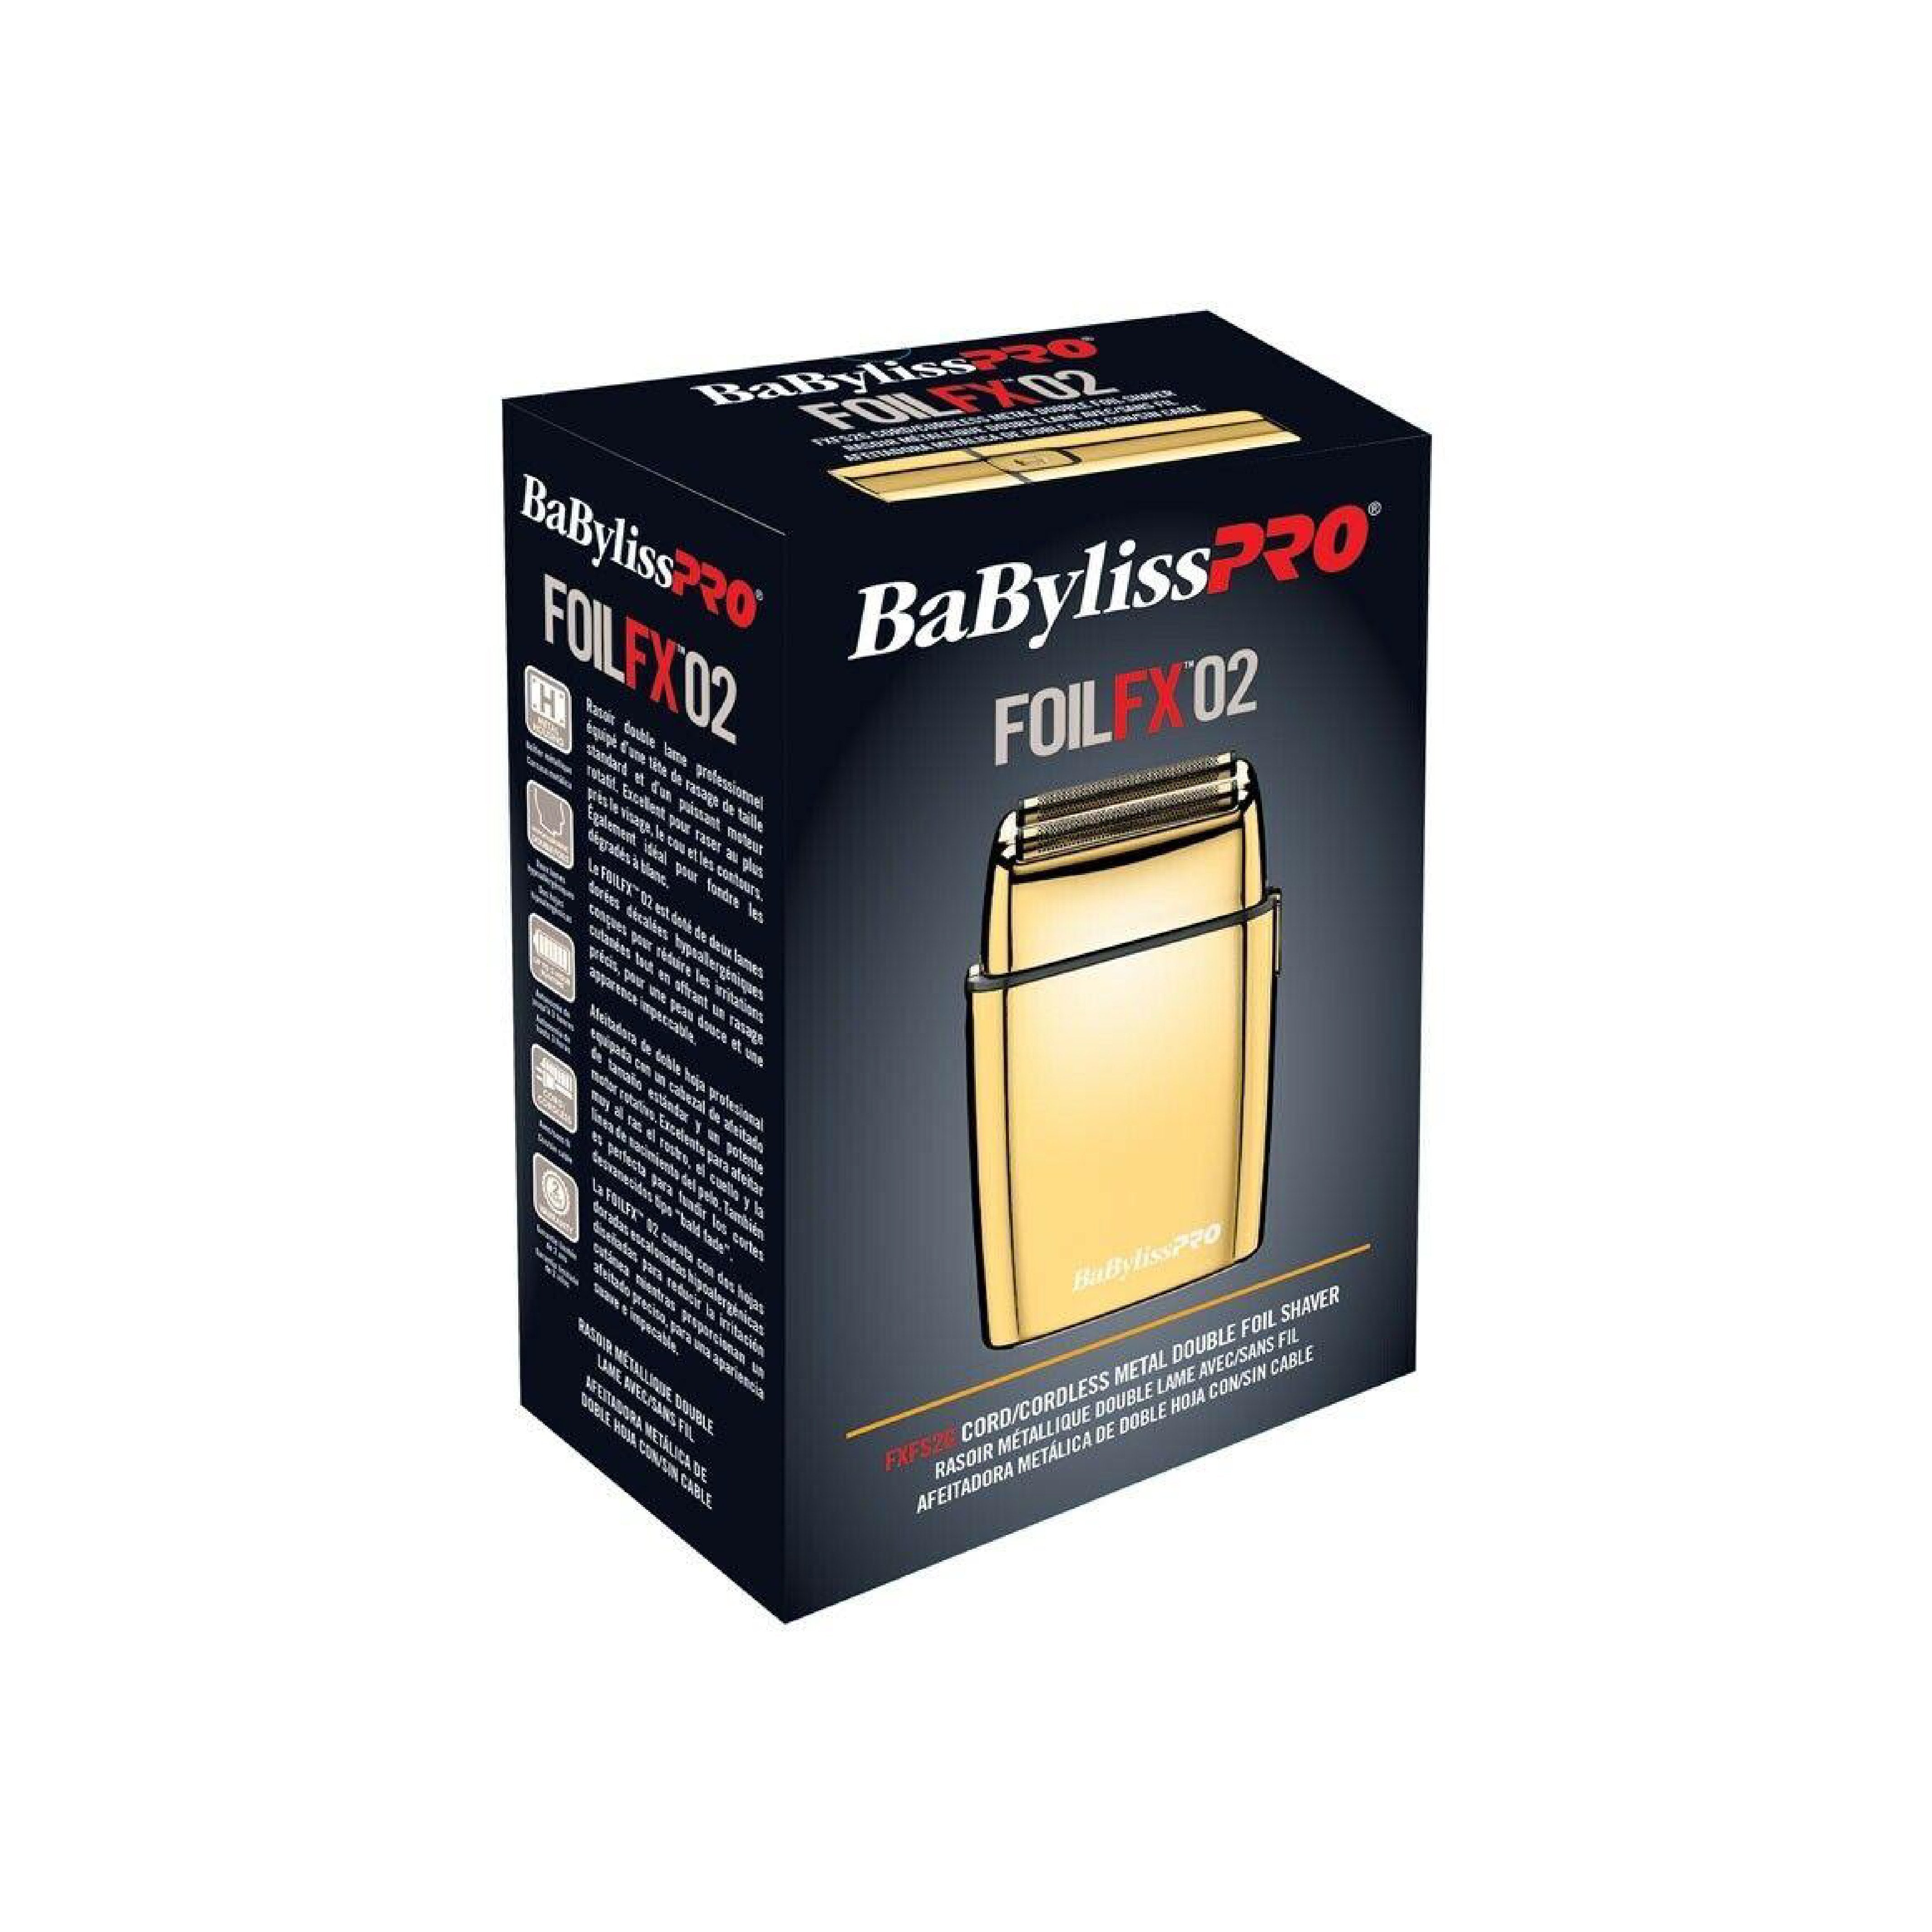 Babyliss Pro FoilFX02 - Gold - Barber Bazaar